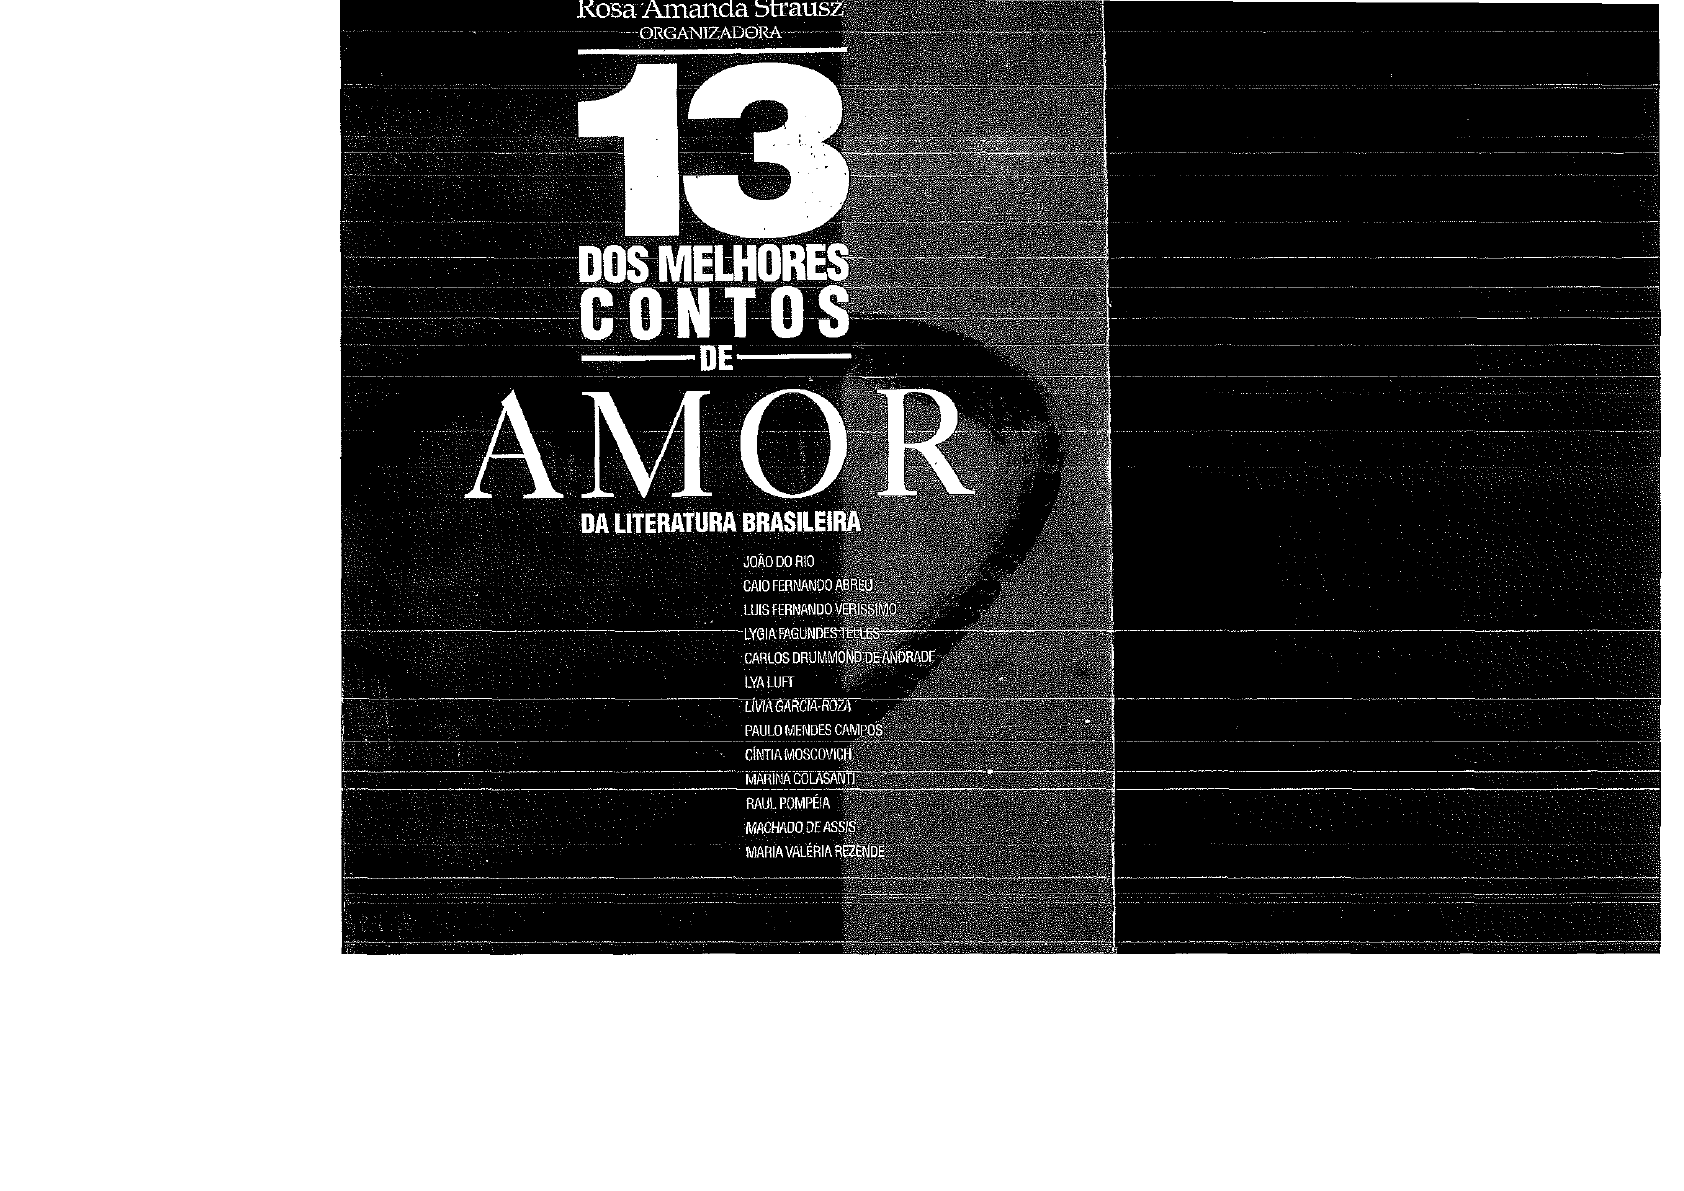 Paulo Mendes Campos o Amor Acaba PDF, PDF, Cães